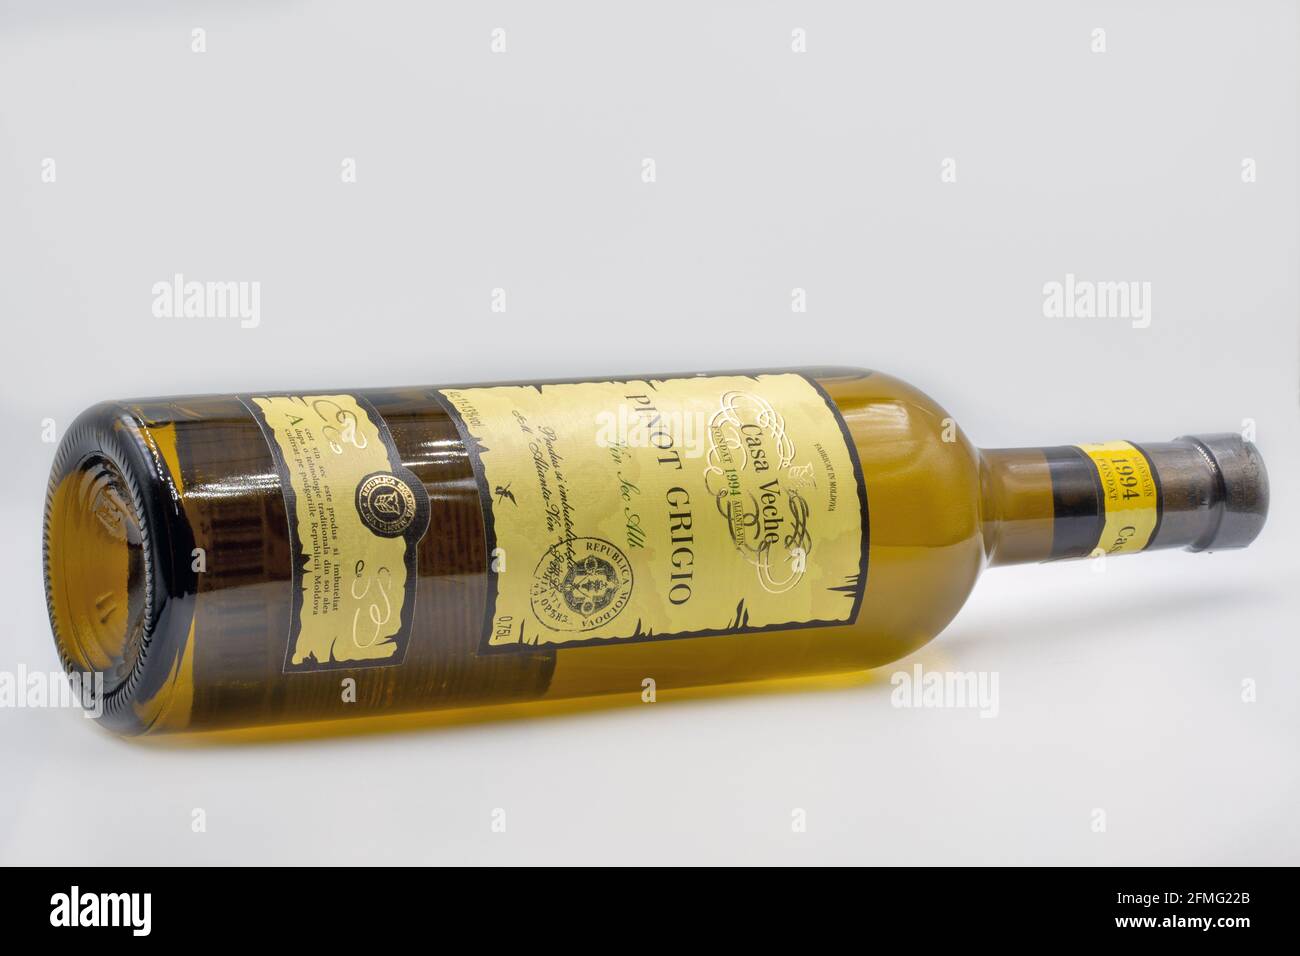 KYIV, UKRAINE - FEBRUARY 27, 2021: Pinot Grigio white dry wine bottle from Casa Veche Moldavian winery closeup against white background. Stock Photo